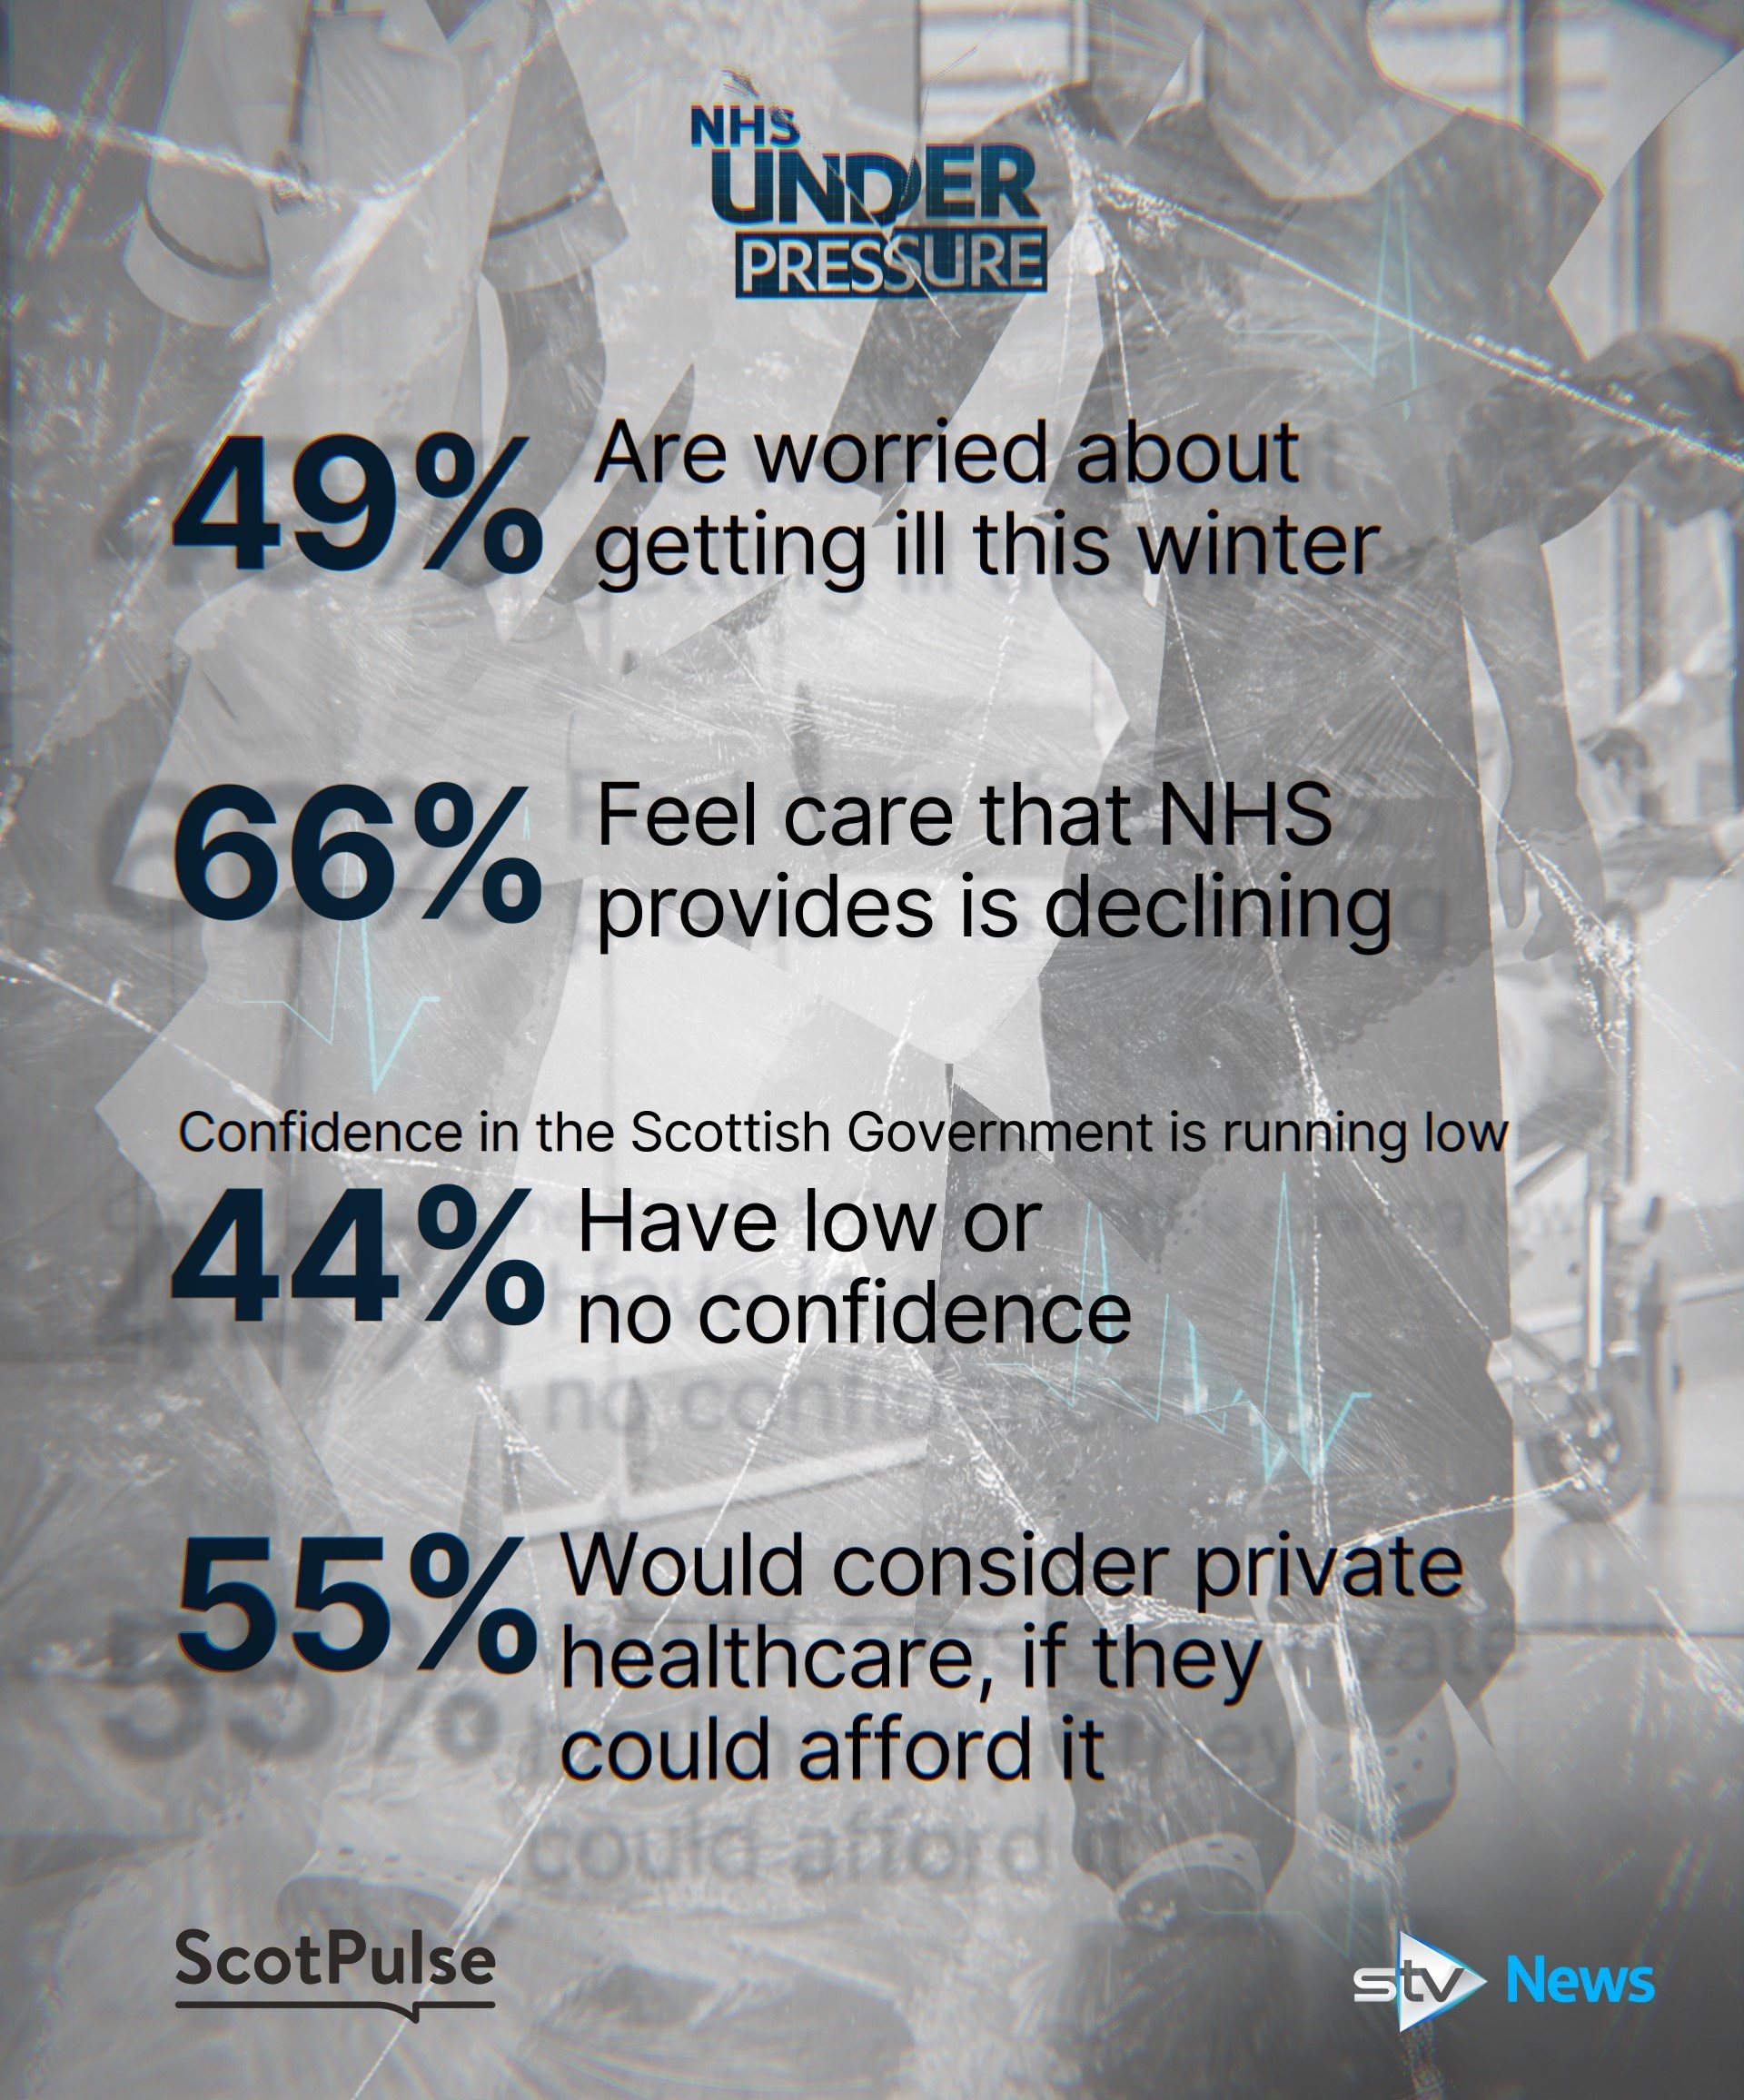 Scotpulse survey on NHS under pressure.